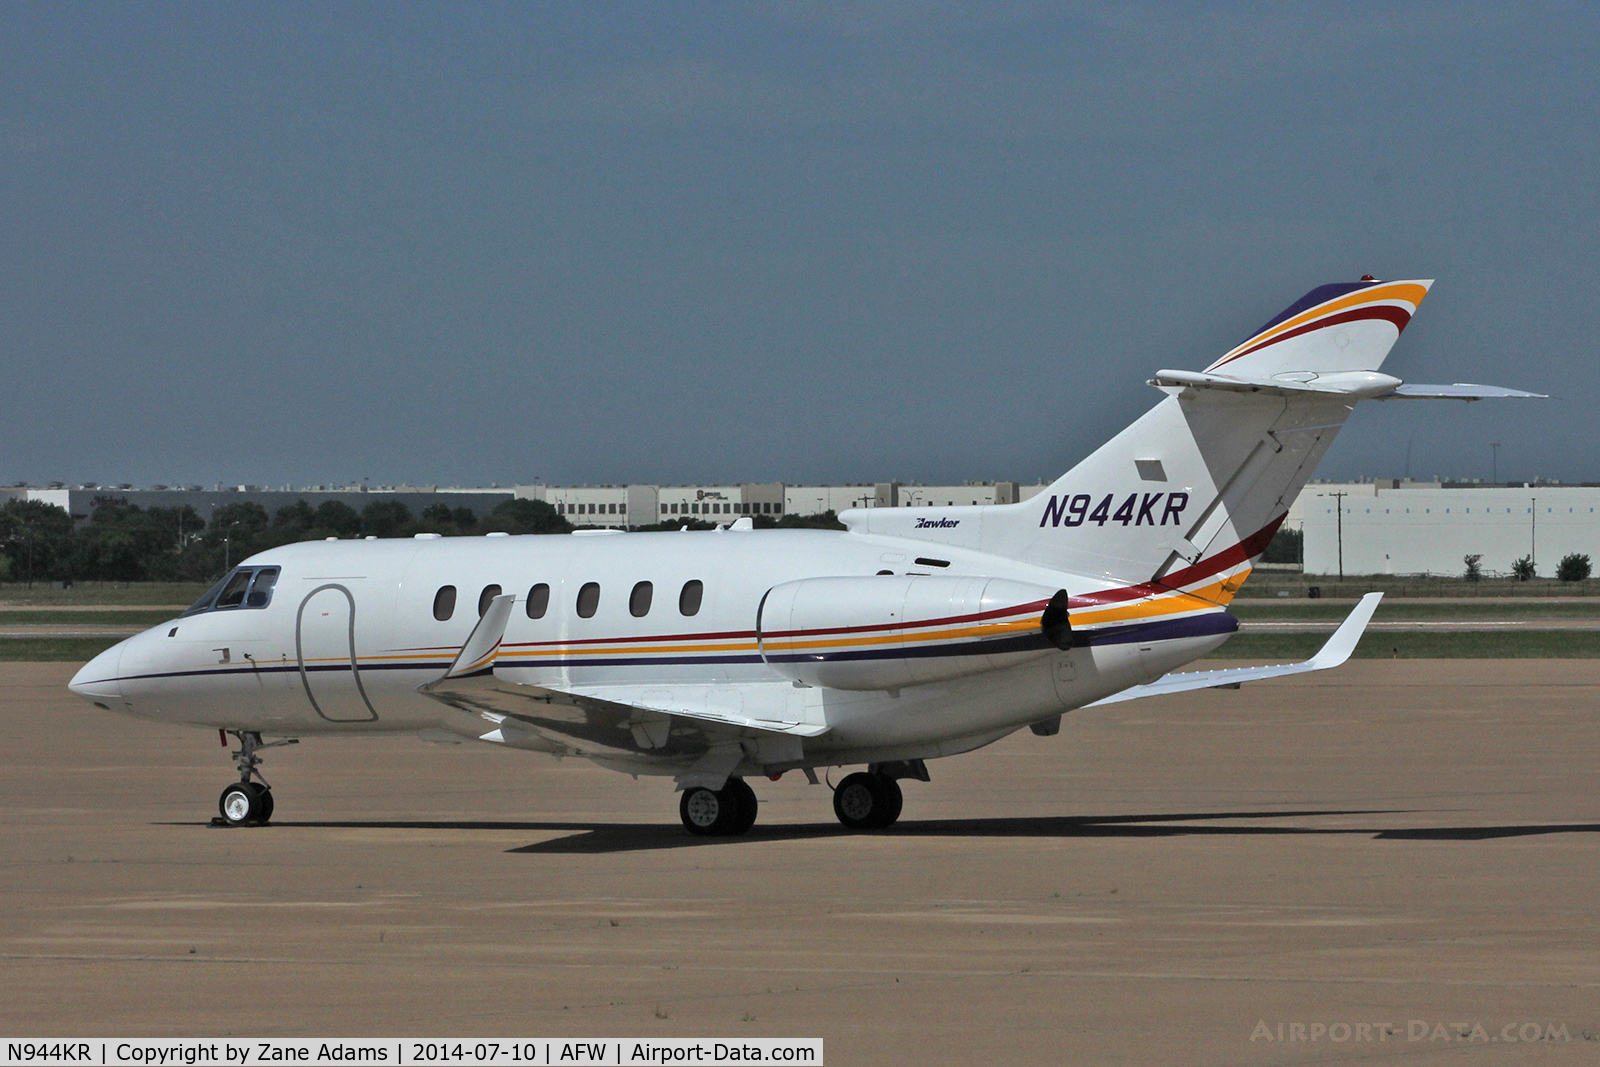 N944KR, 2004 Raytheon Hawker 800XP C/N 258688, At Alliance Airport - Fort Worth,TX